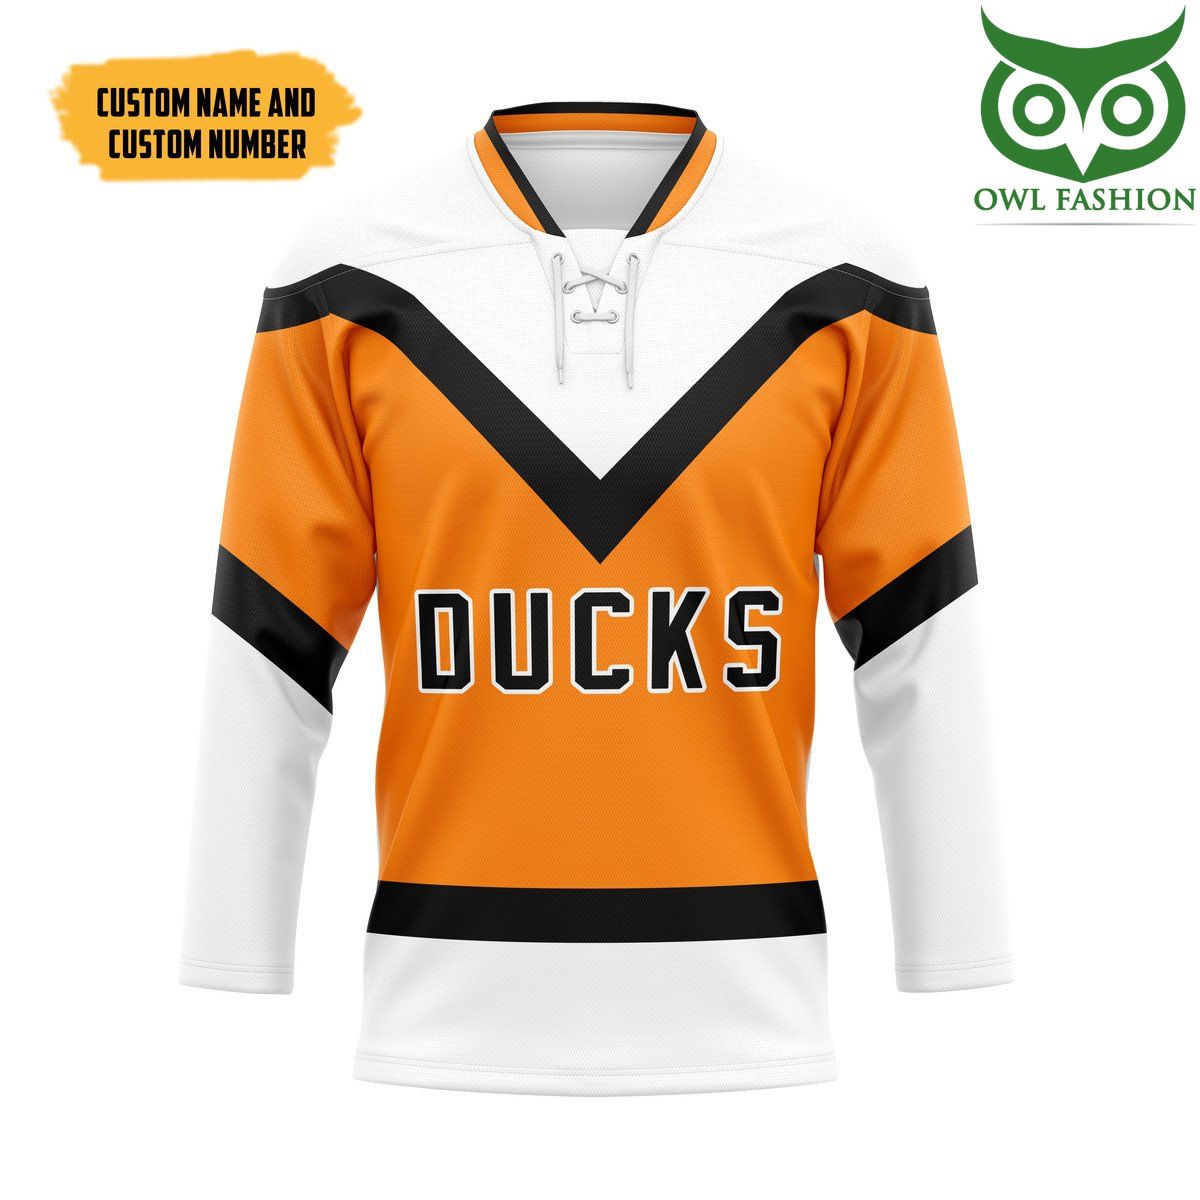 3D Long Island Duck Custom Name Number Hockey Jersey